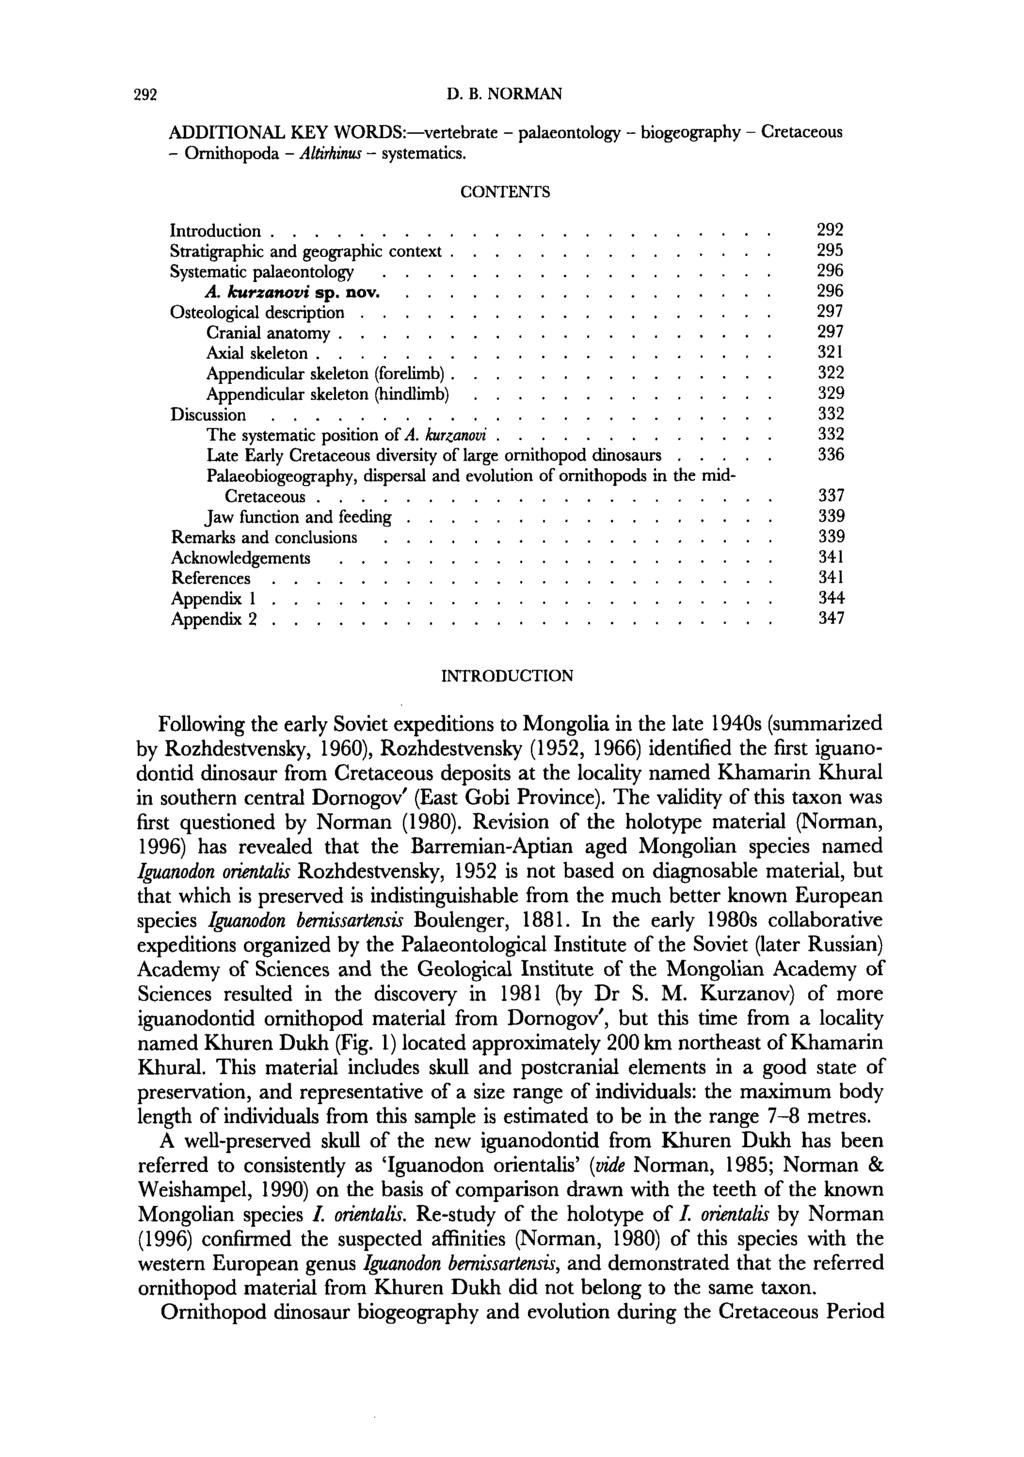 292 D. B. NORMAN ADDITIONAL KEY WORDS:-vertebrate - palaeontology - biogeography - Cretaceous - Ornithopoda - Altirhinlrr - systematics. CONTENTS Introduction.